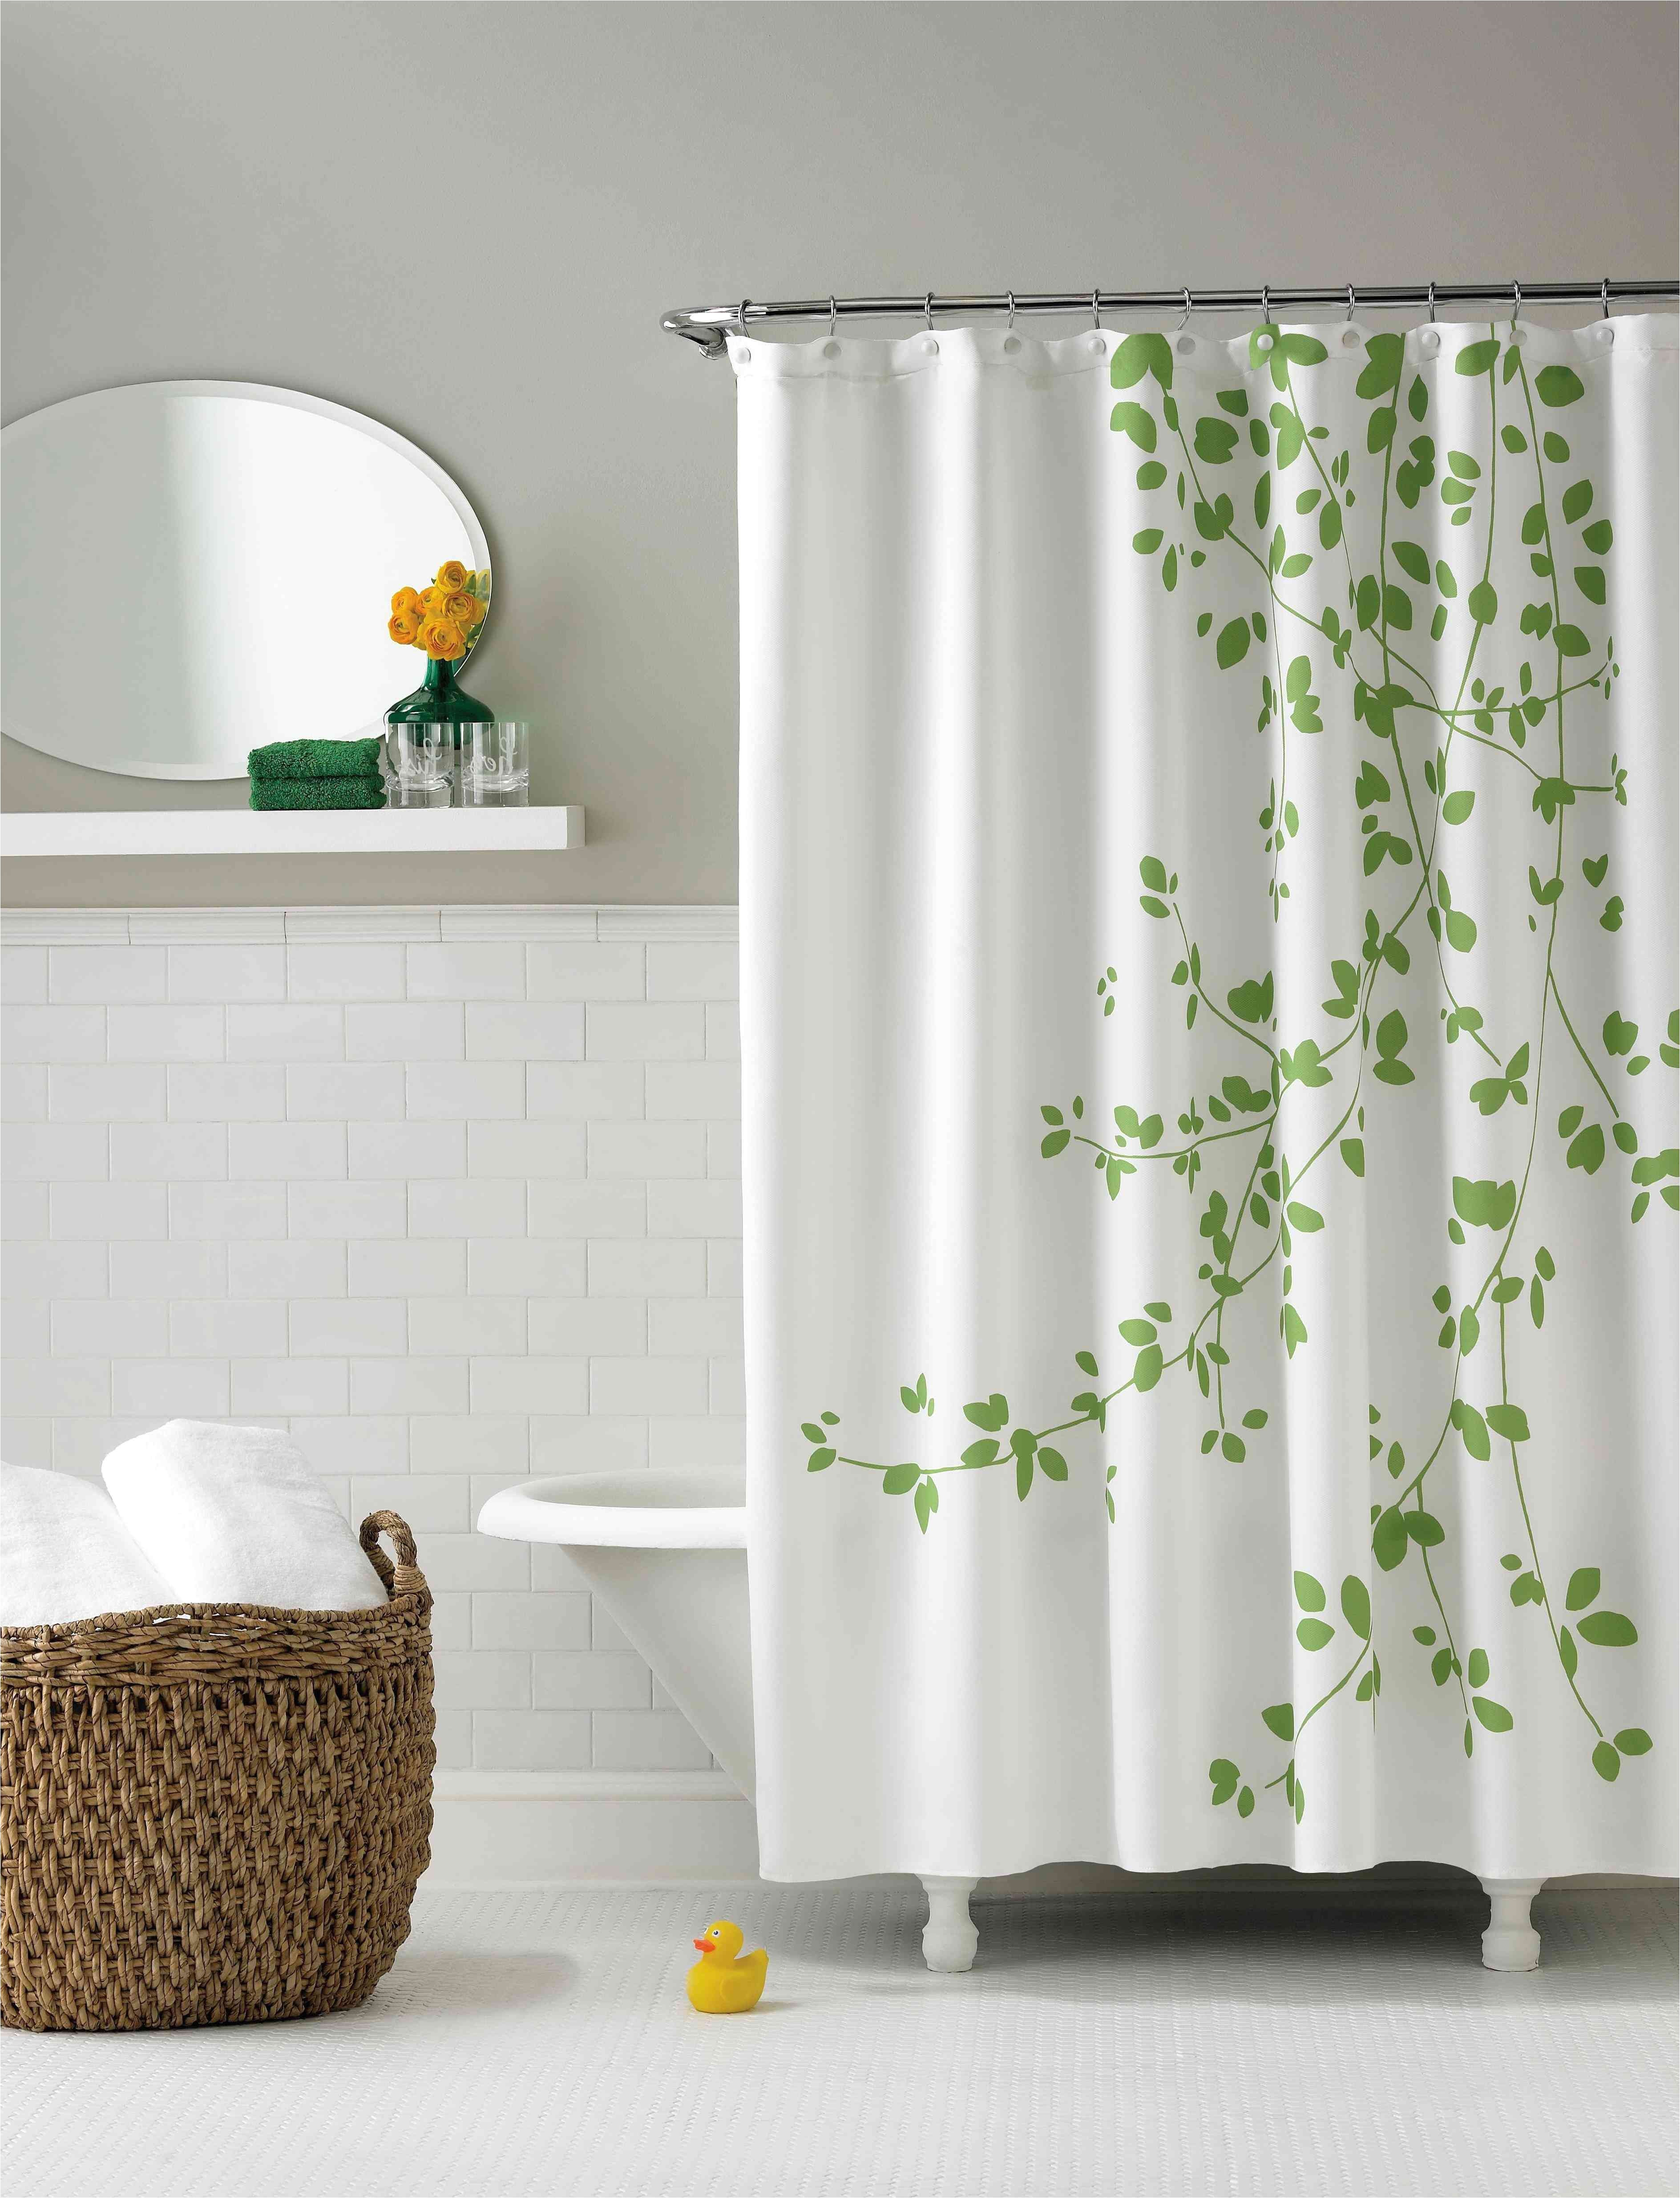 Extended Shower Chair 31 Beautiful Ikea Shower Curtains Shower Curtains Ideas Design